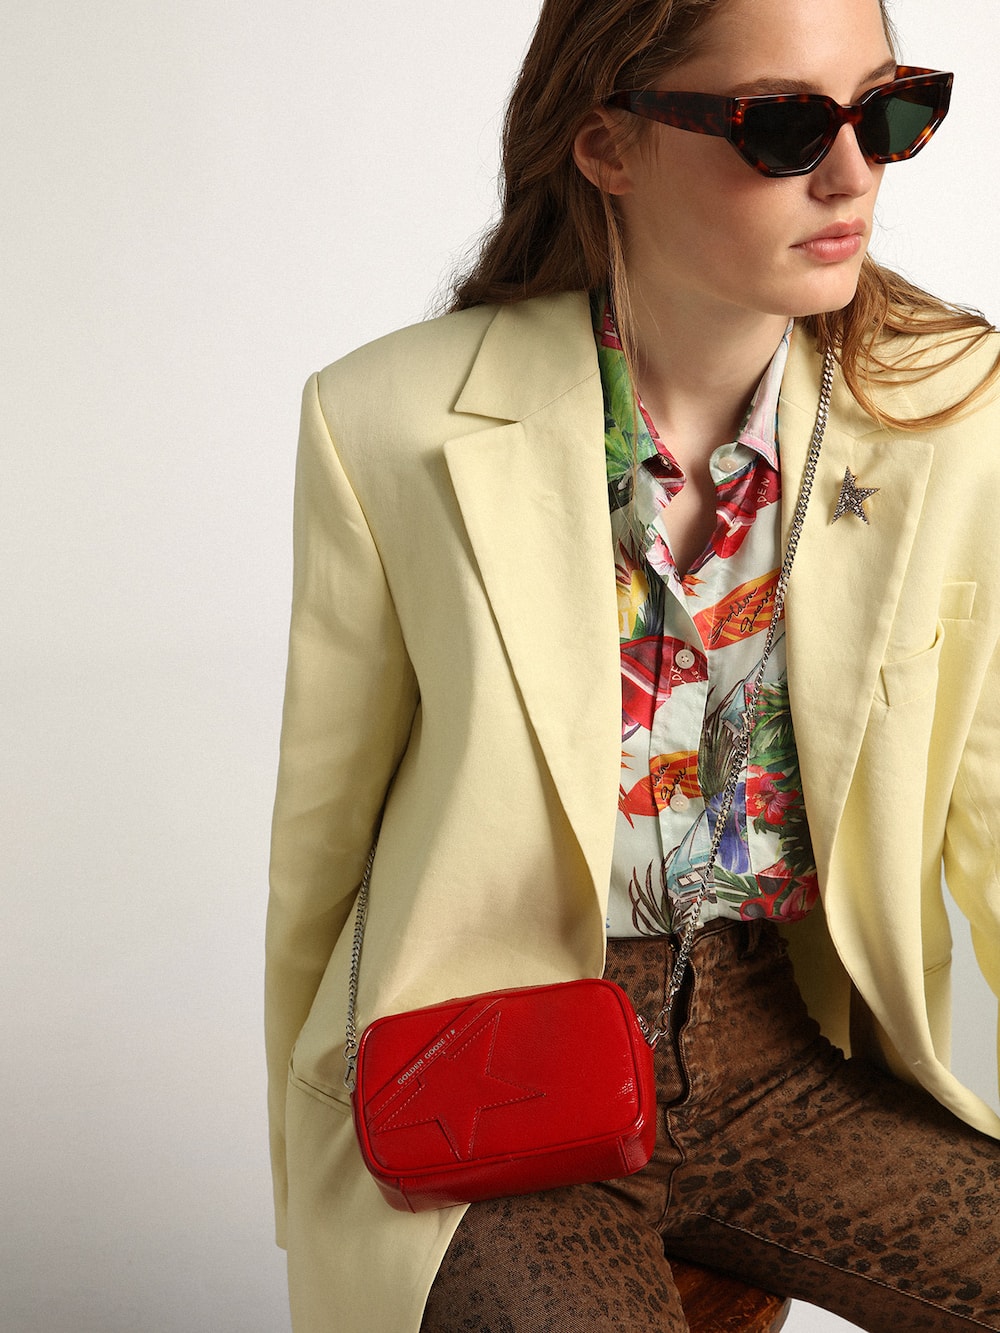 Golden Goose - Mini Star Bag aus rot lackiertem Leder mit Ton-in-Ton-Stern in 